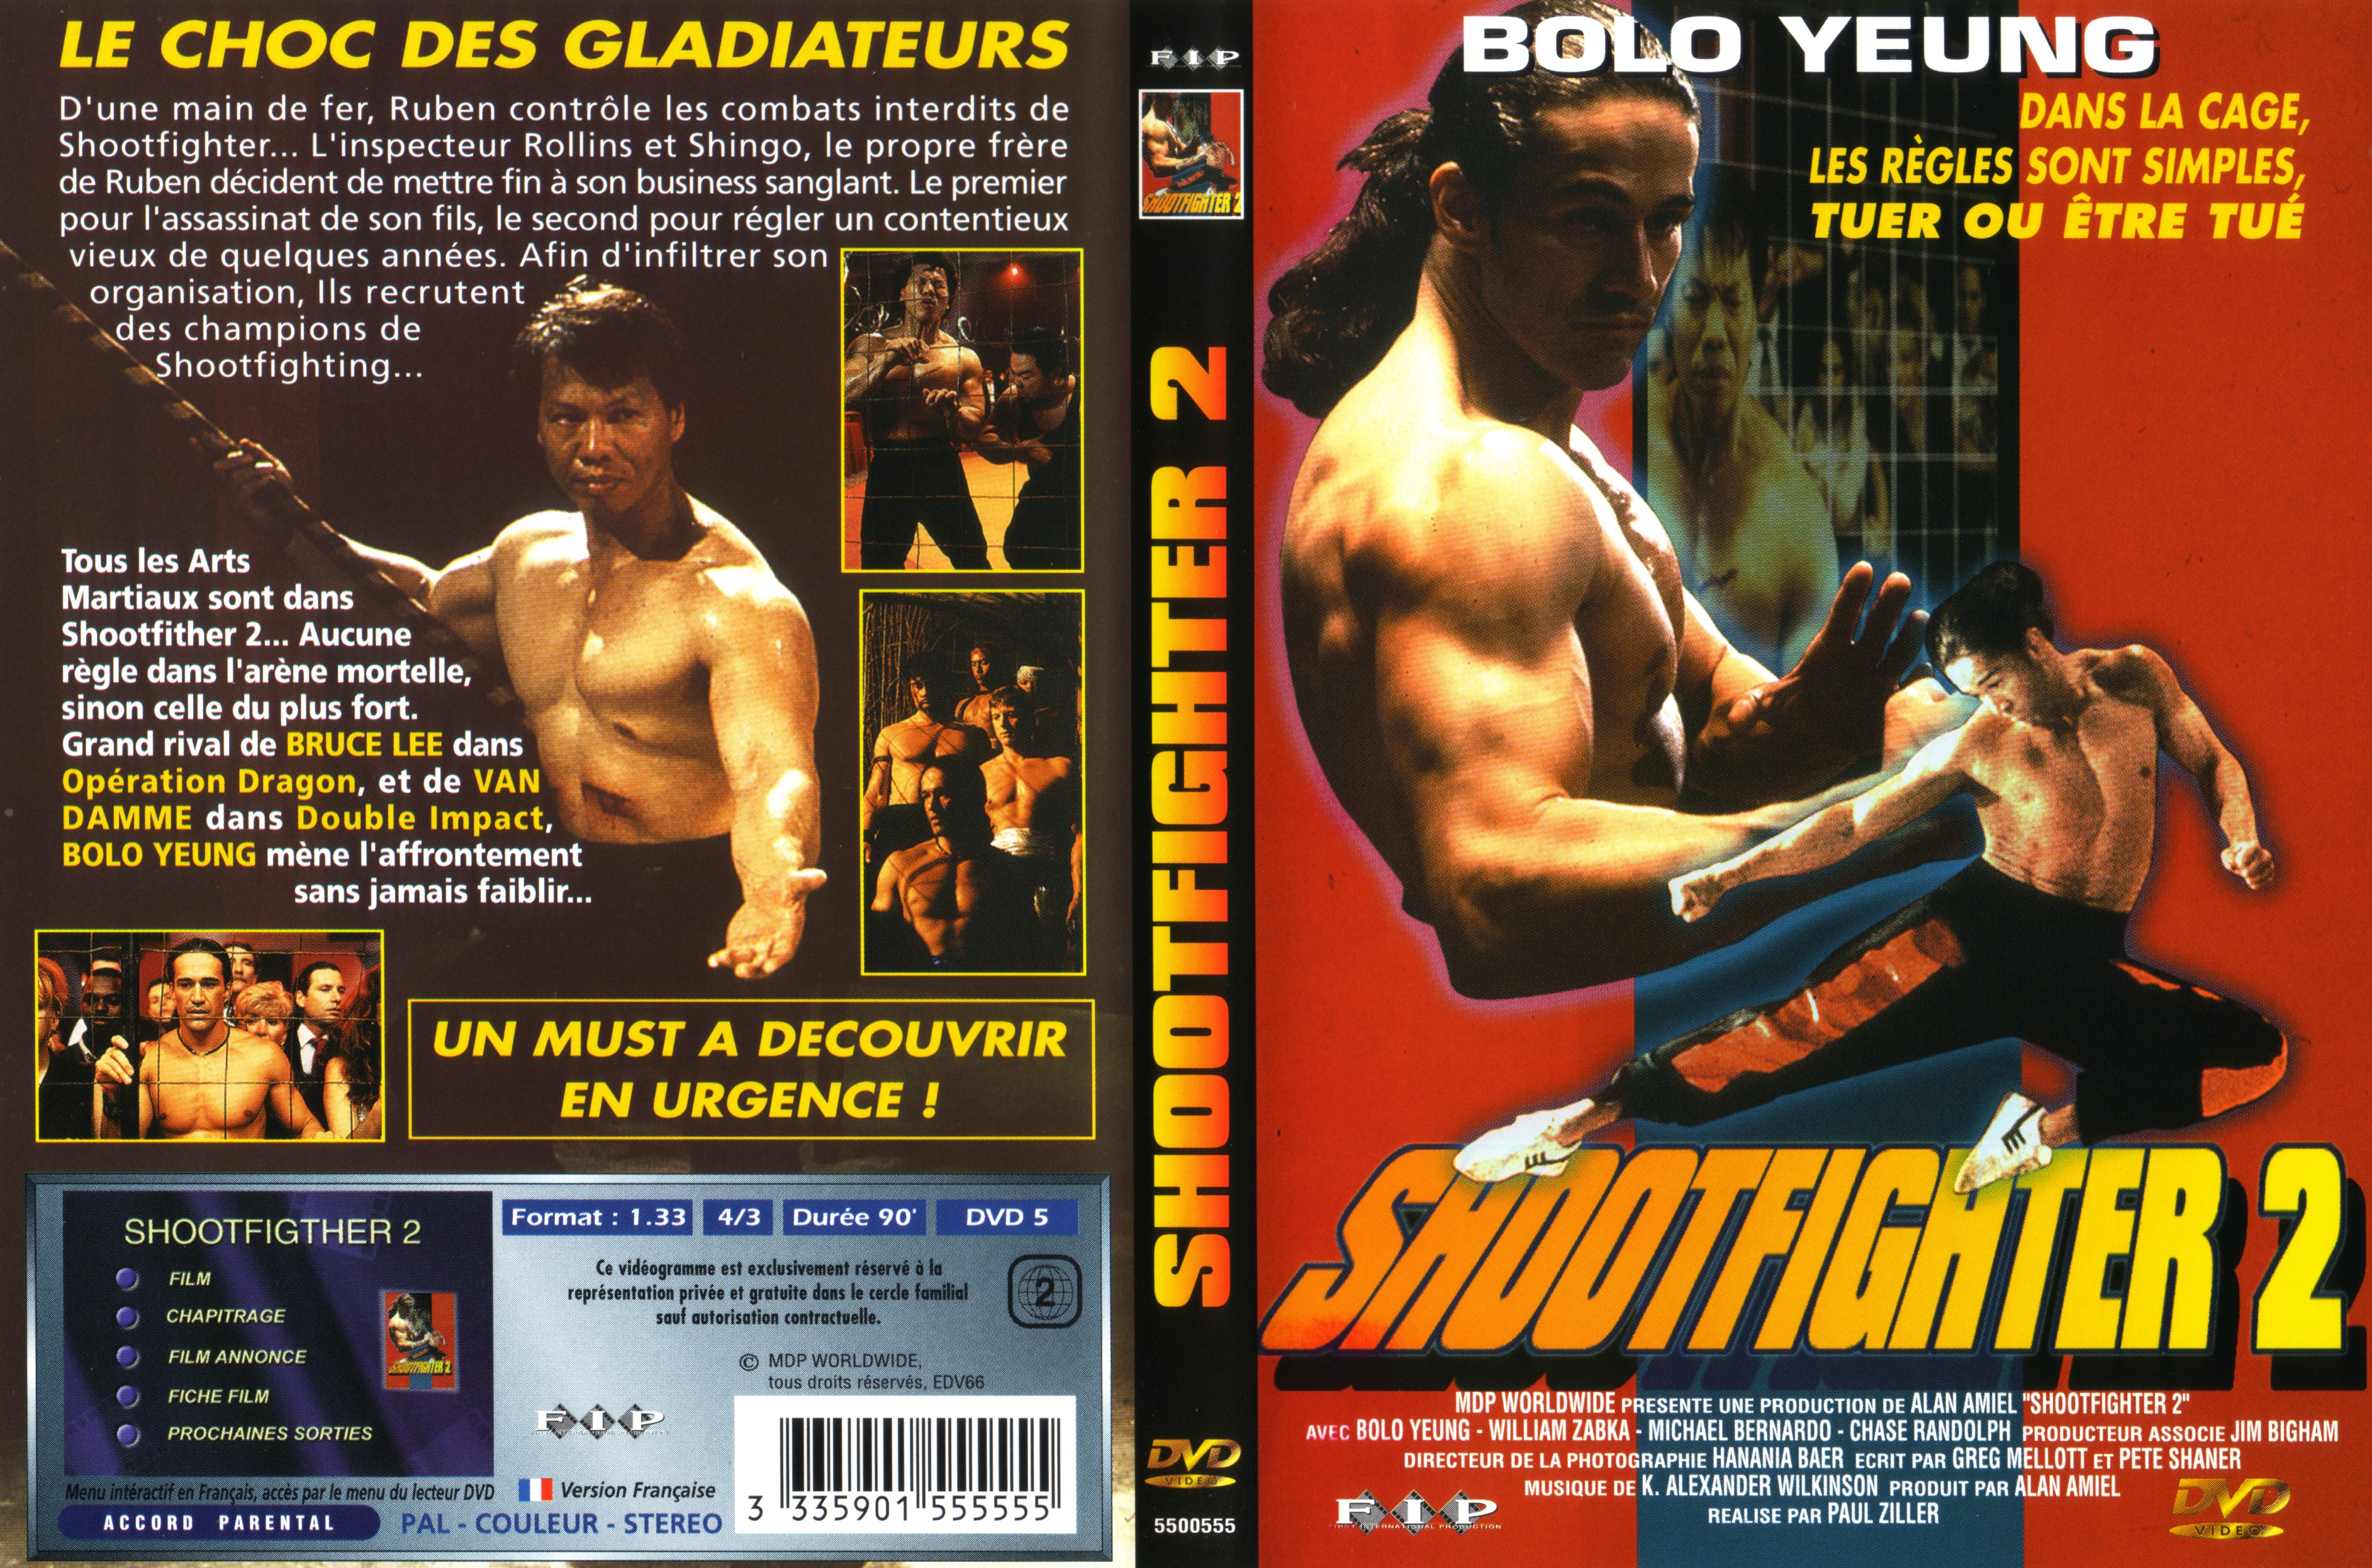 Jaquette DVD Shootfighter 2 v2